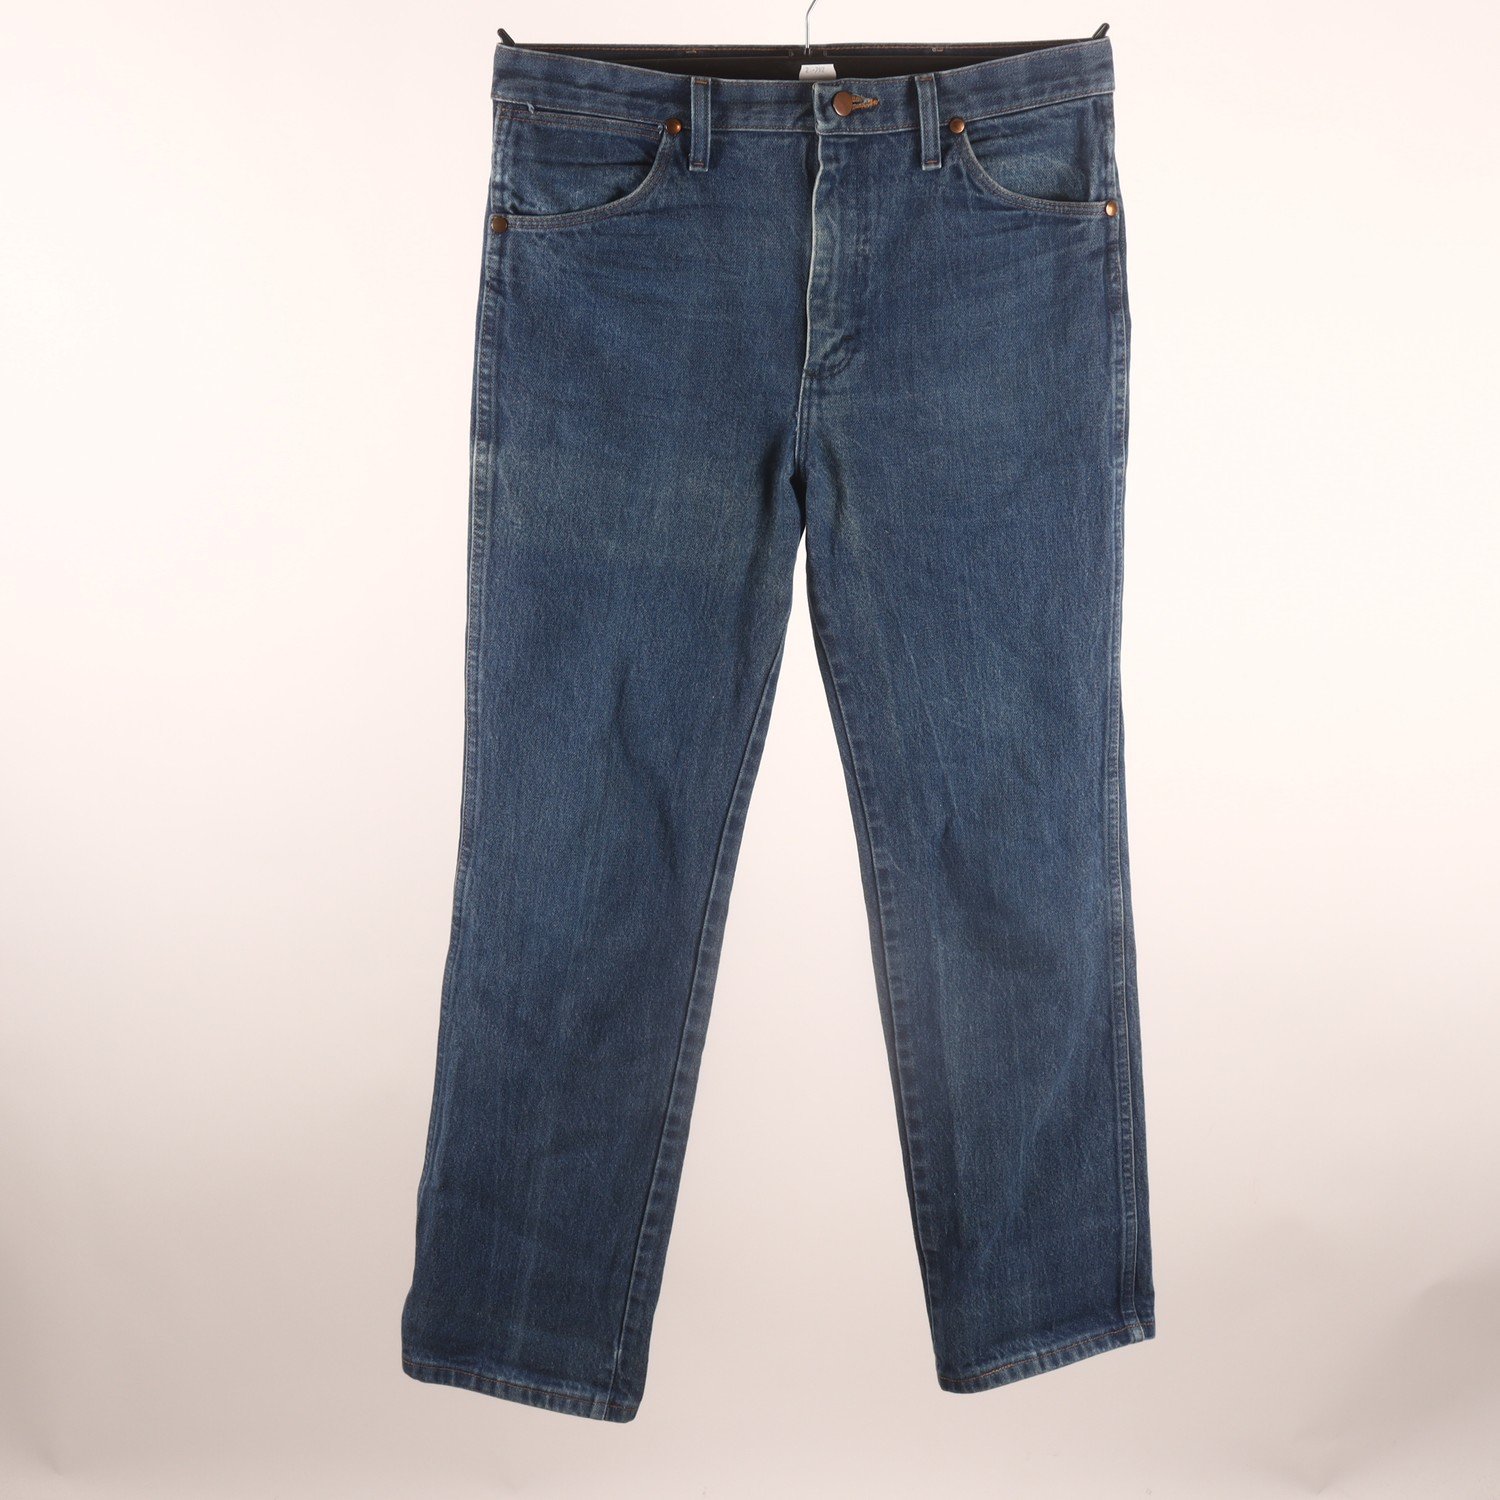 Jeans, Wrangler, vintage, stl. 32/30